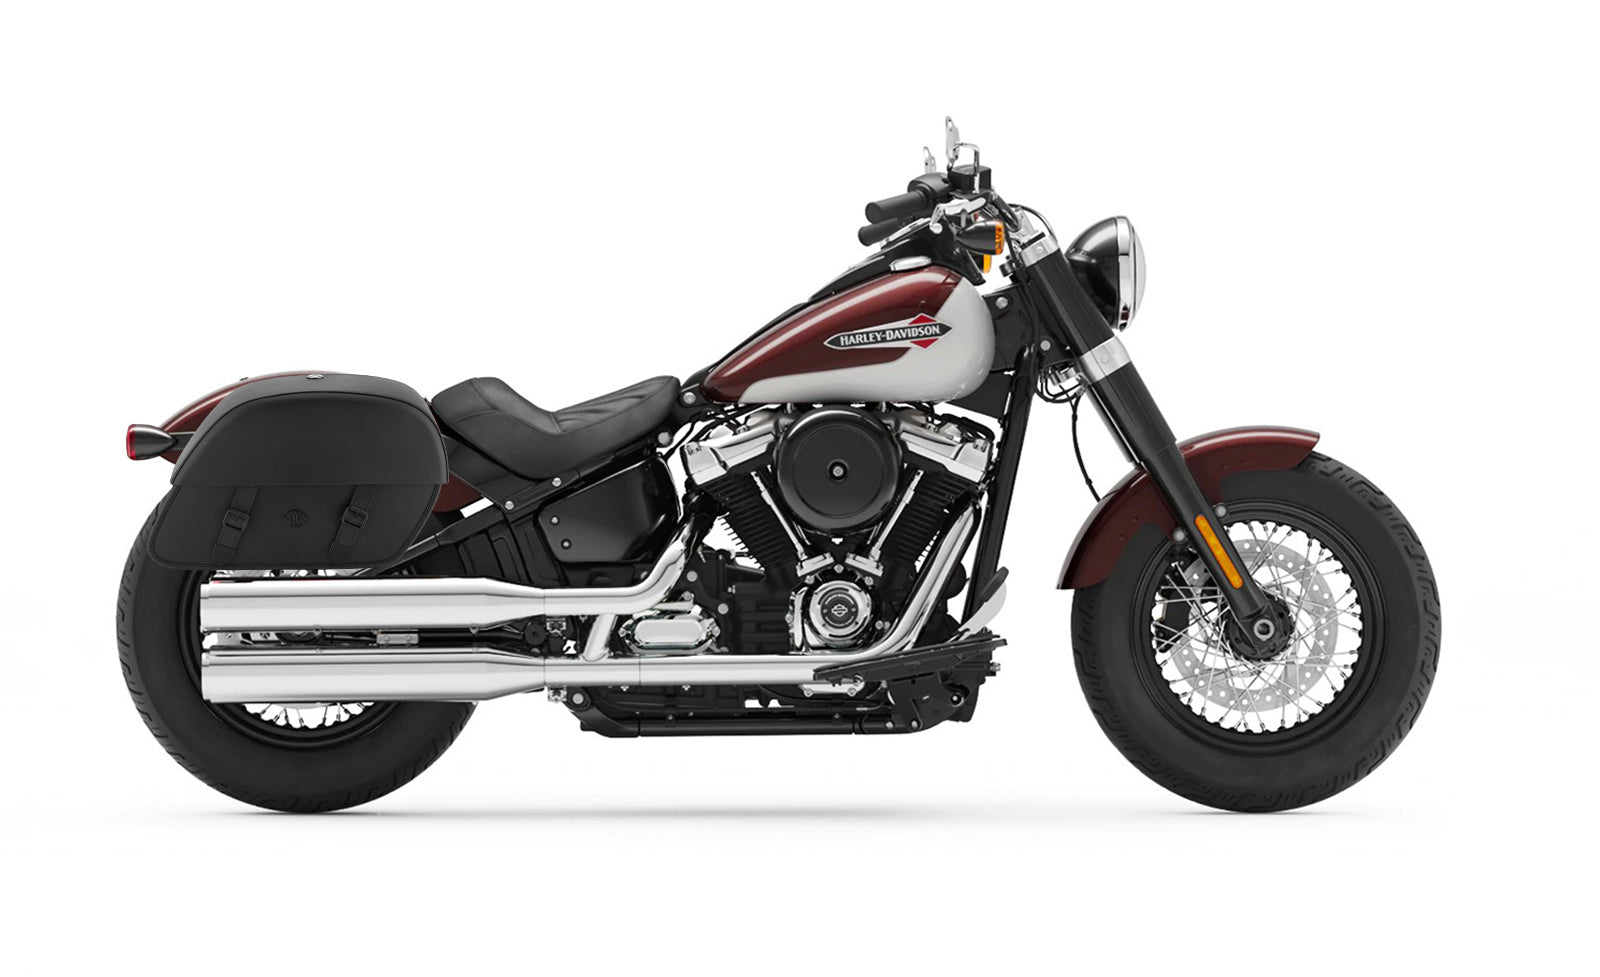 33L - Baelor Large Leather Saddlebags For Harley Softail Slim FLSL on Bike Photo @expand